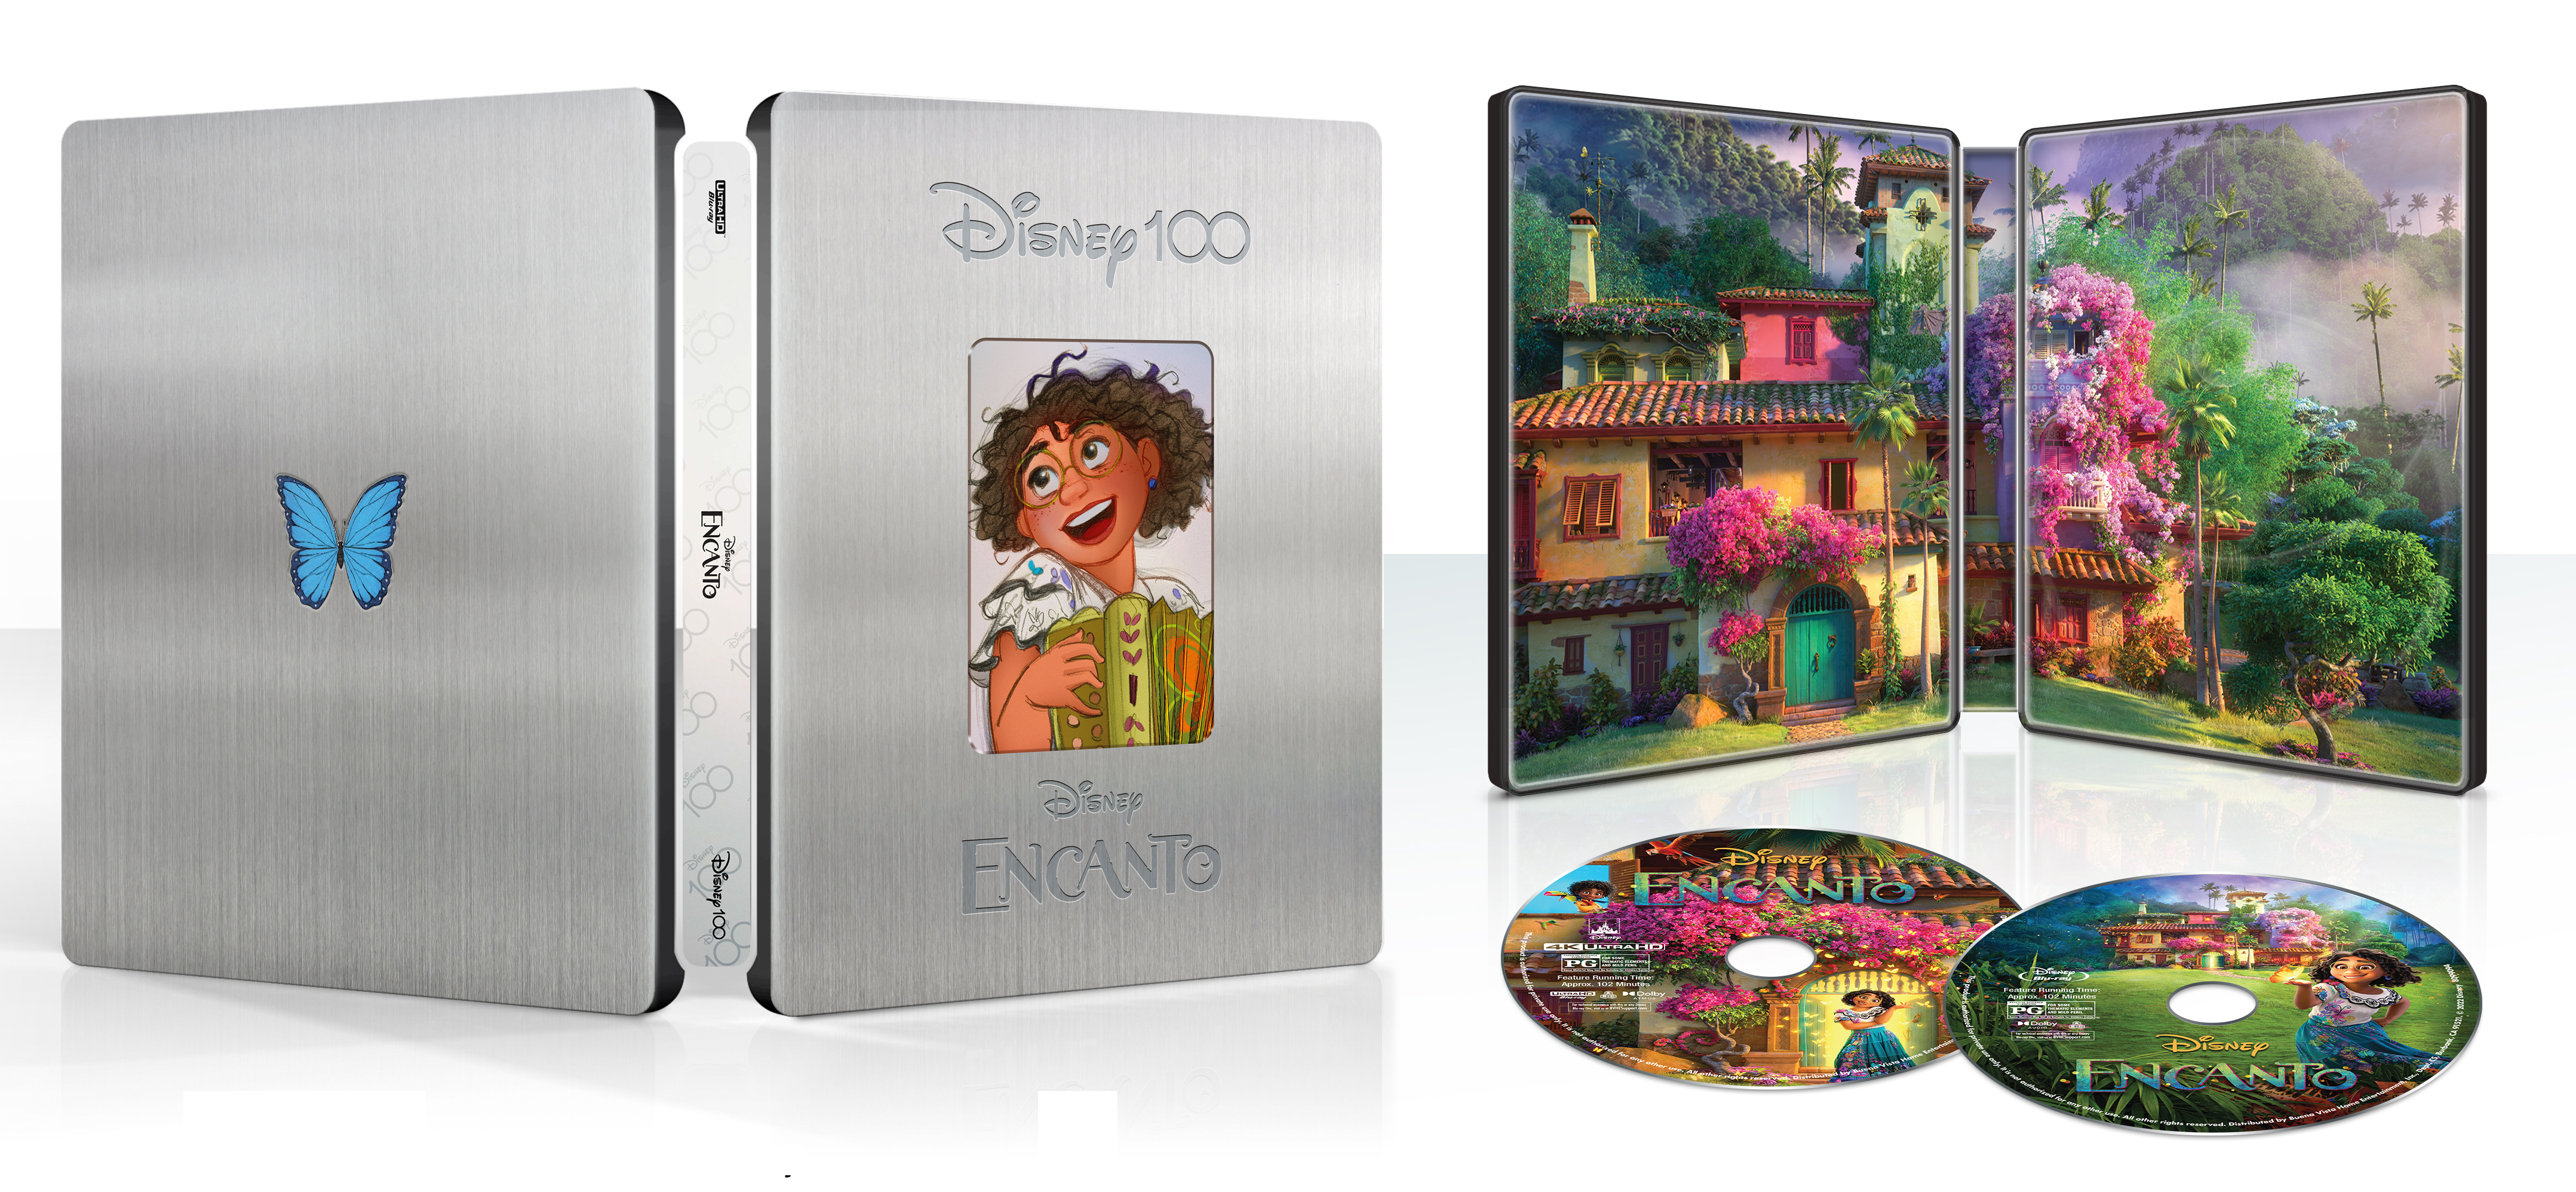 Encanto (Blu-ray Steelbook) Brand New & Sealed